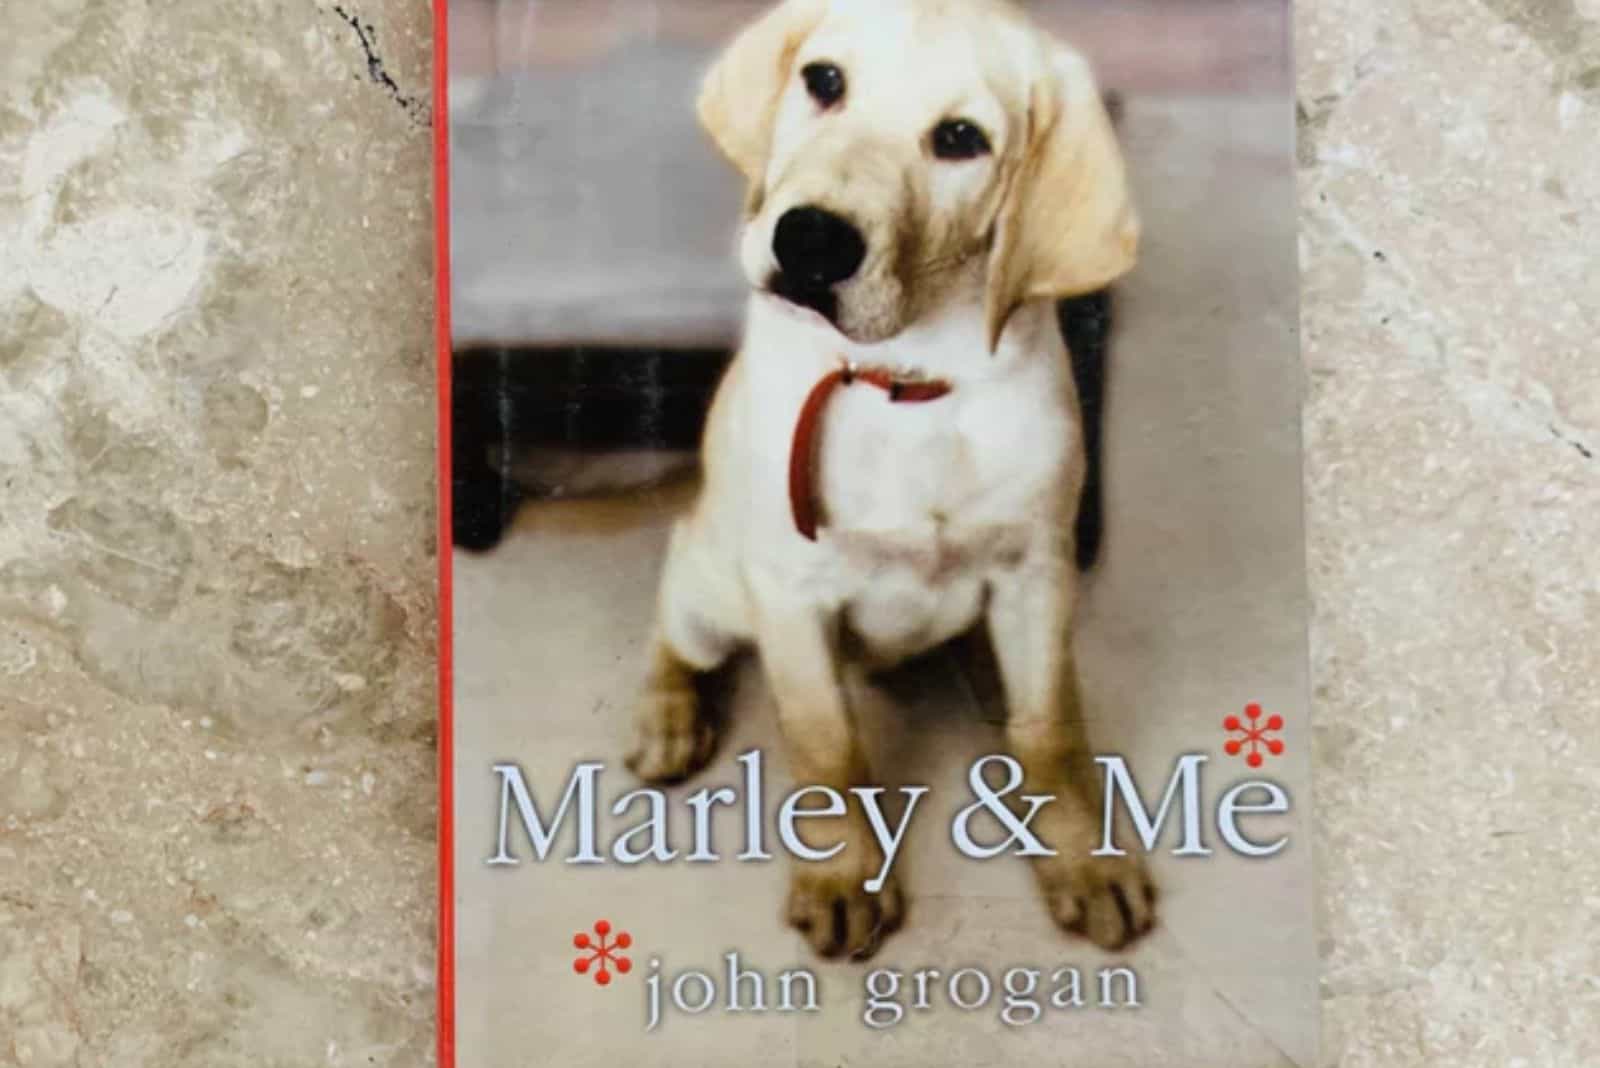 Marley & Me book